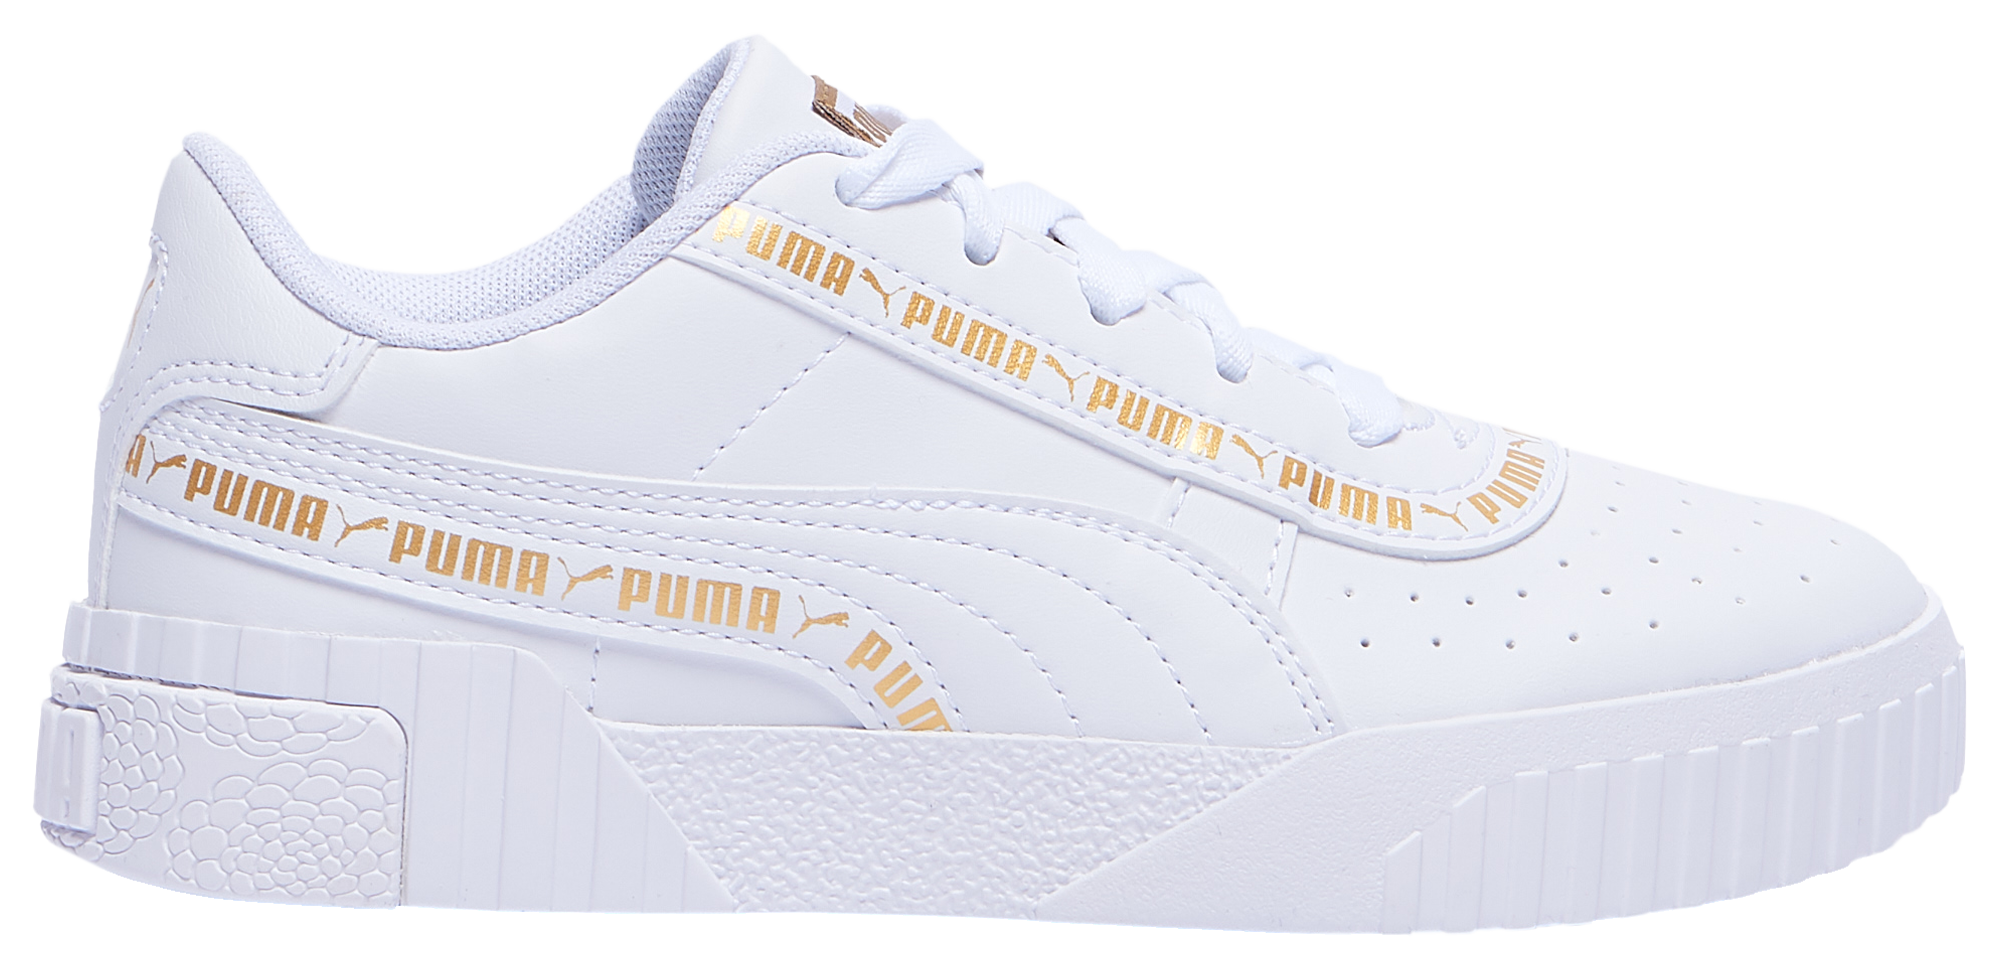 puma shoe for girls